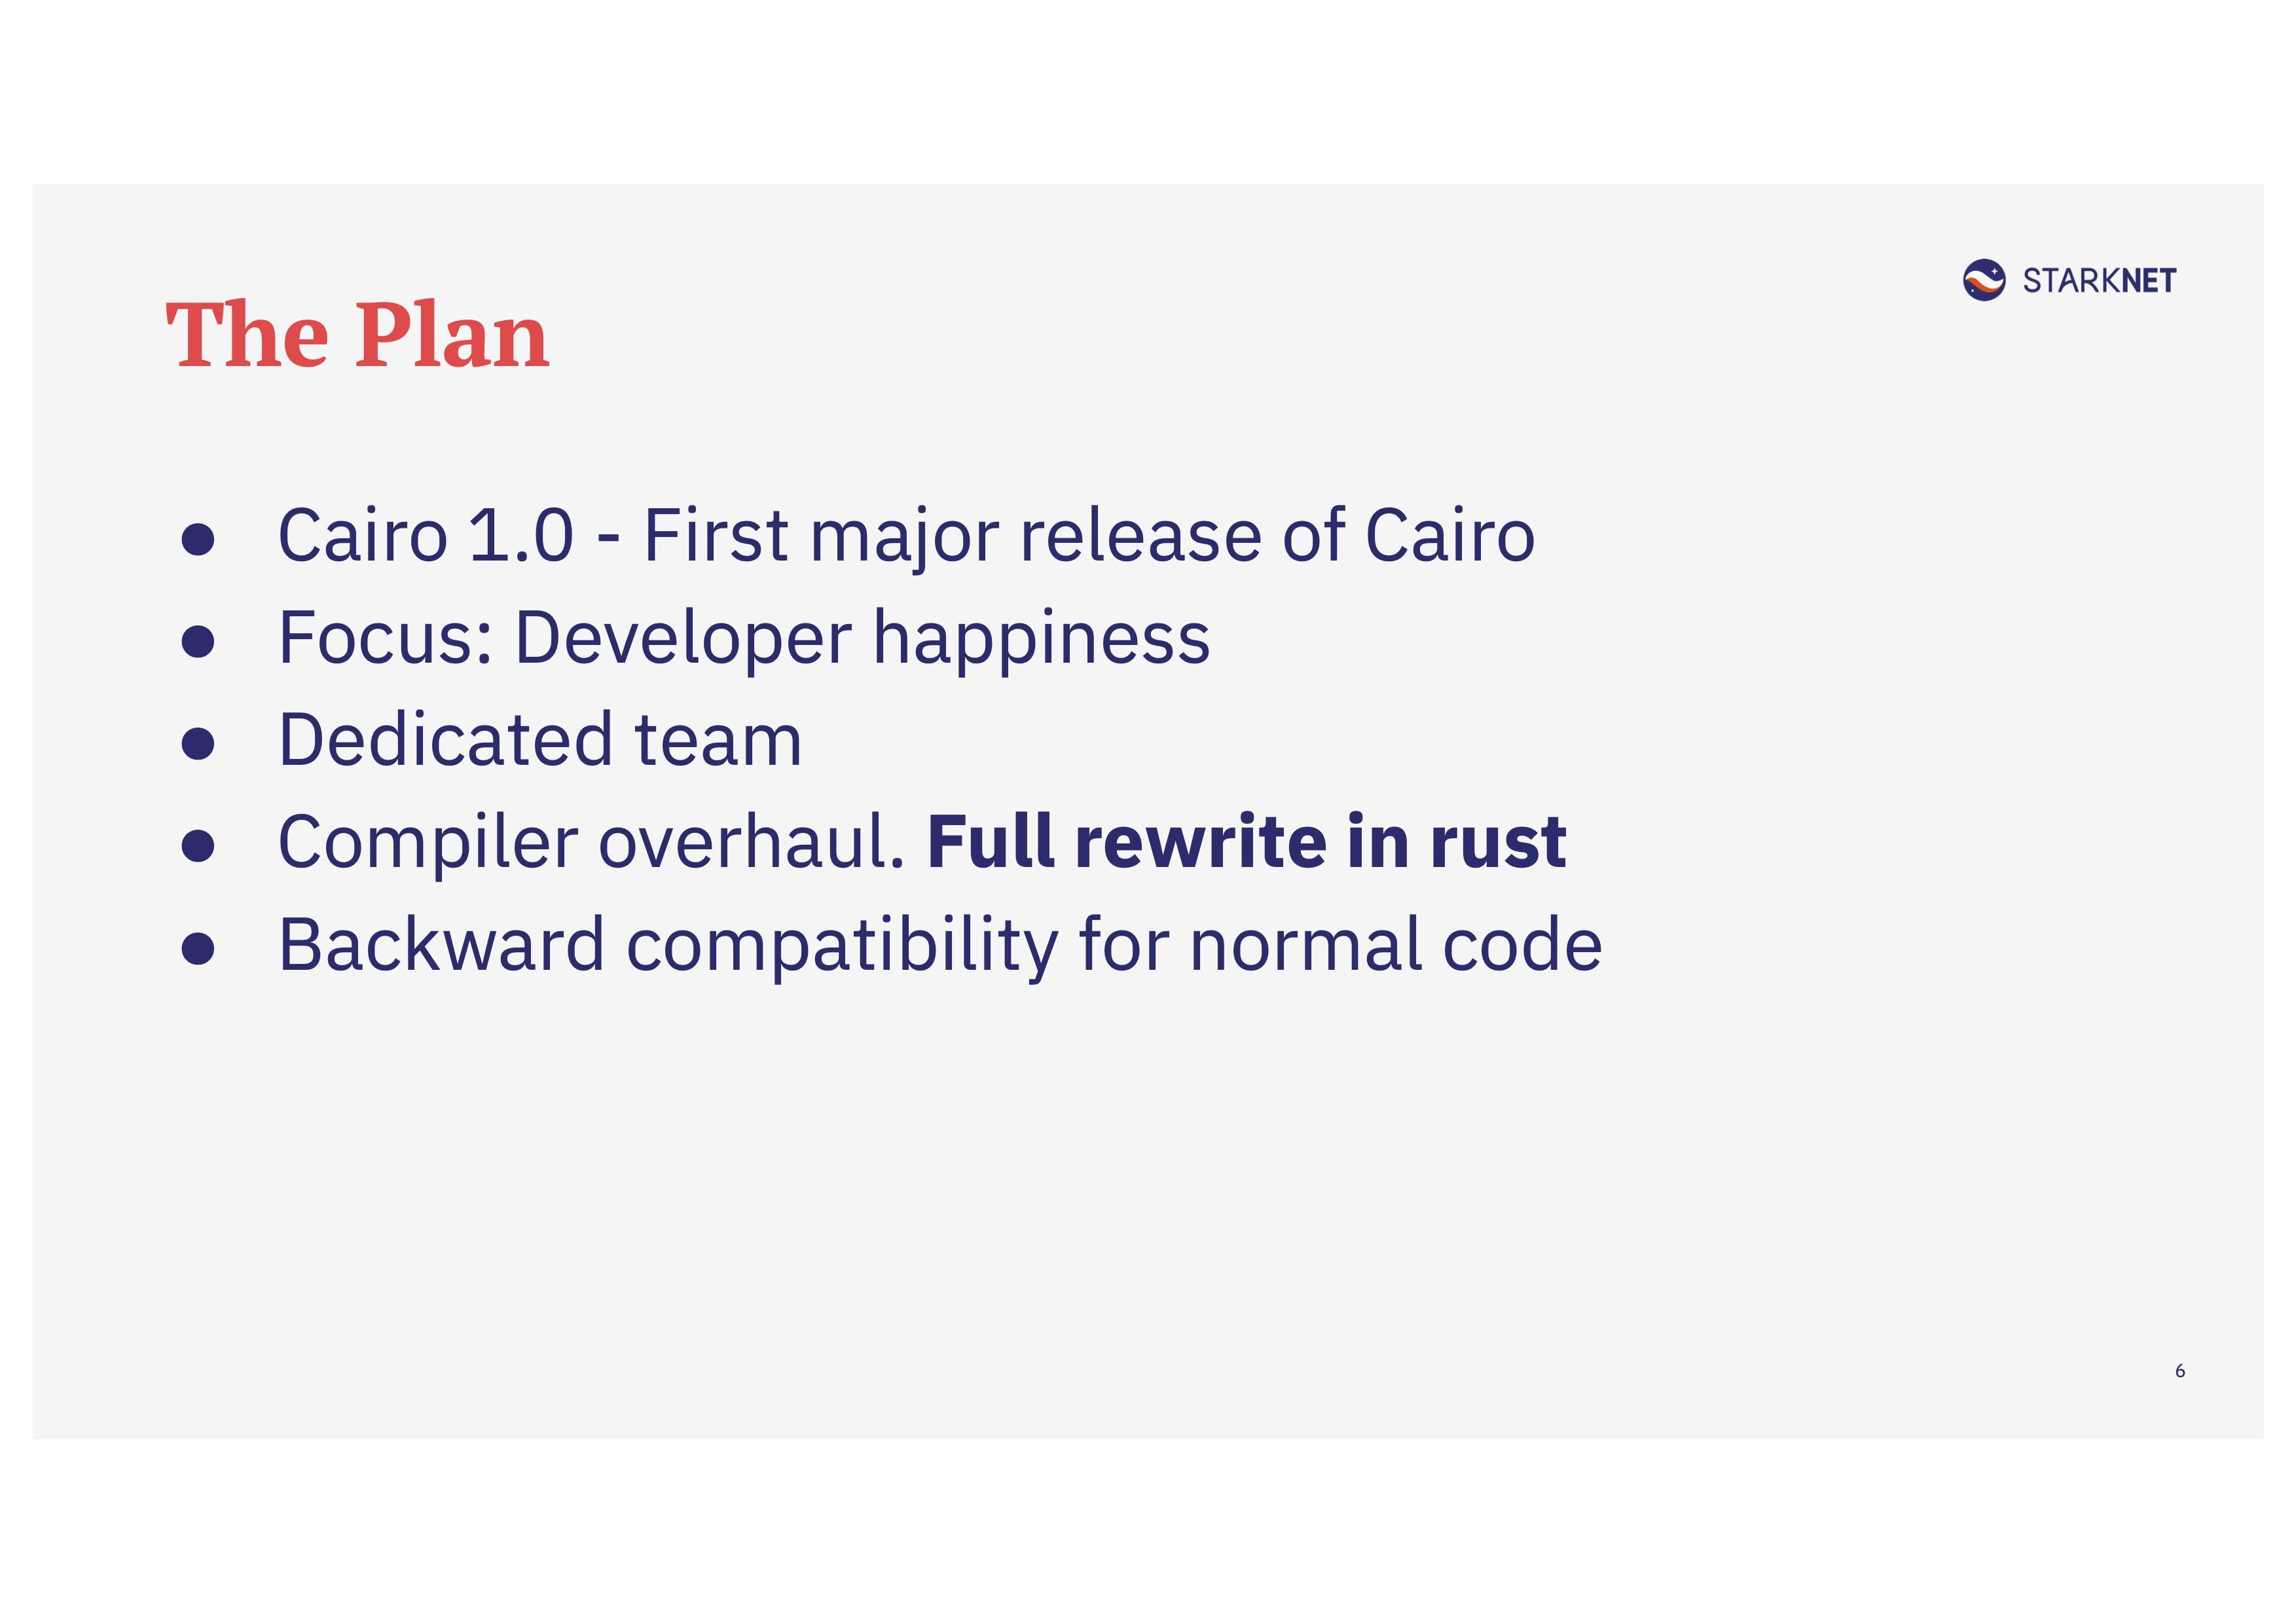 Cairo 1.0 - The plan